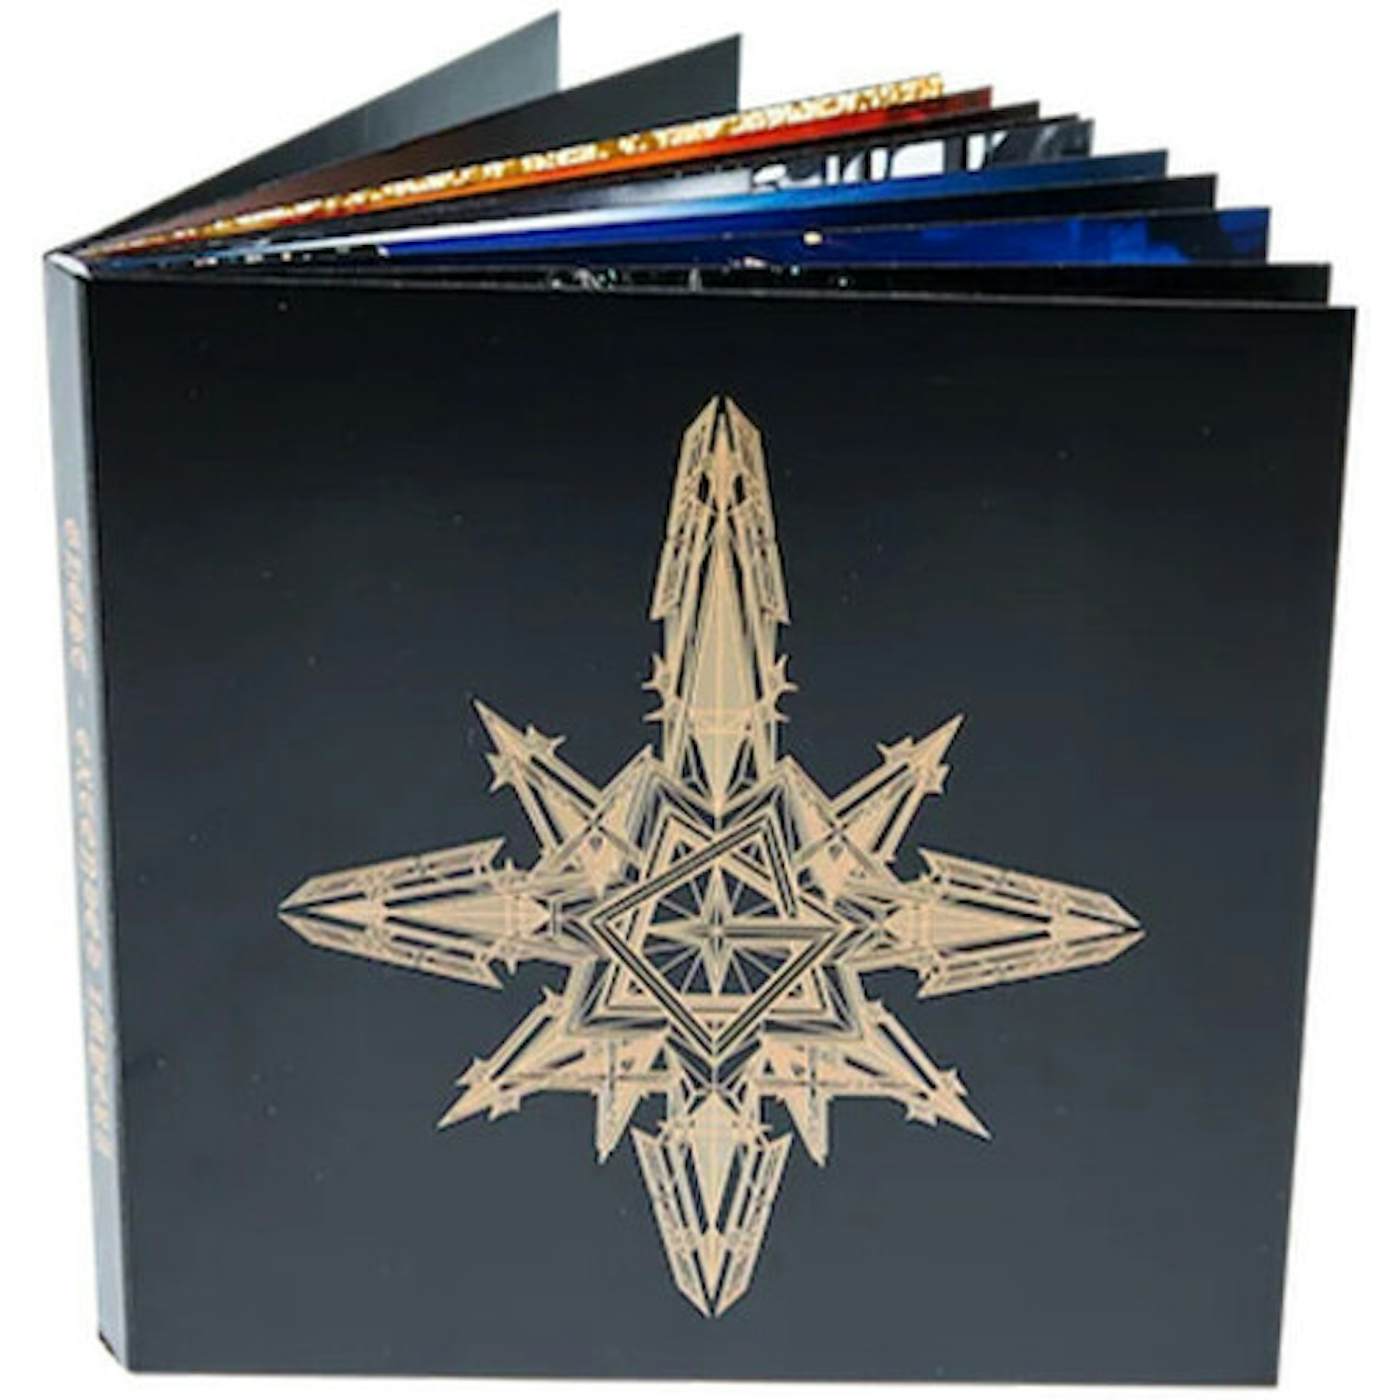 Ghost Extended Impera Box Set (Scandinavian Version) (Vinyl)